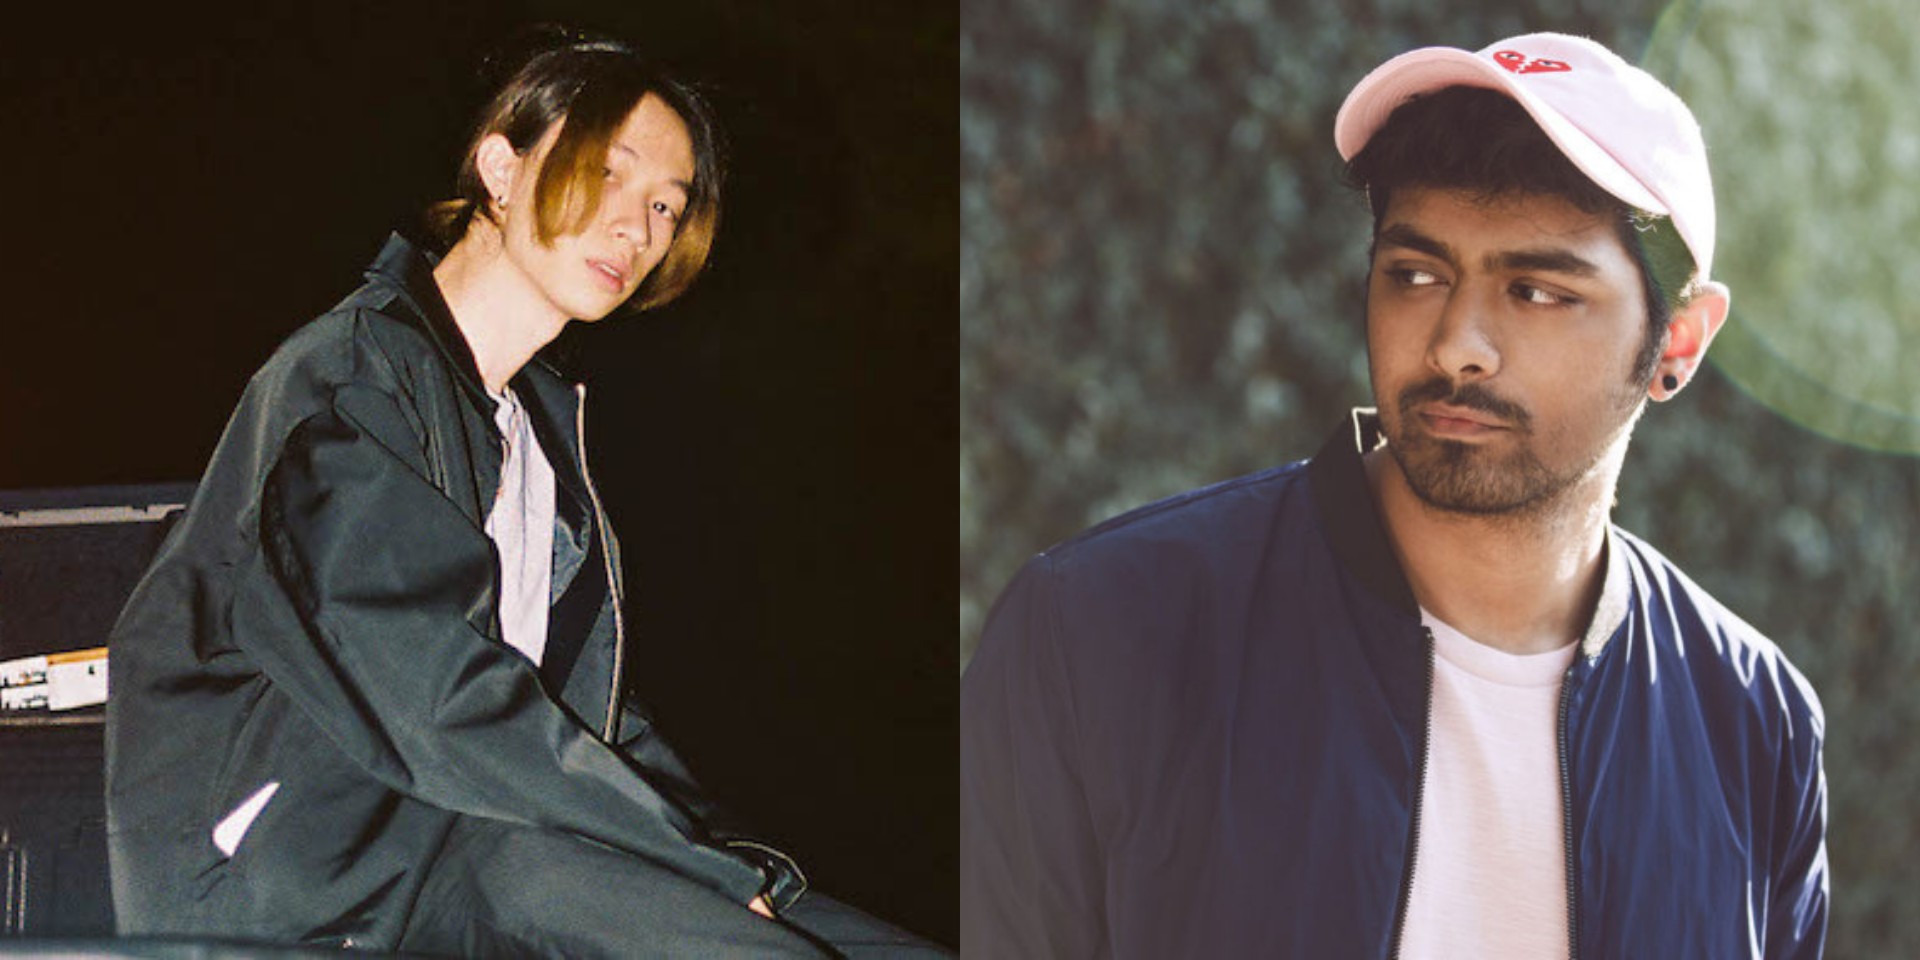 keshi and Jai Wolf team up for 'blue' remix - listen